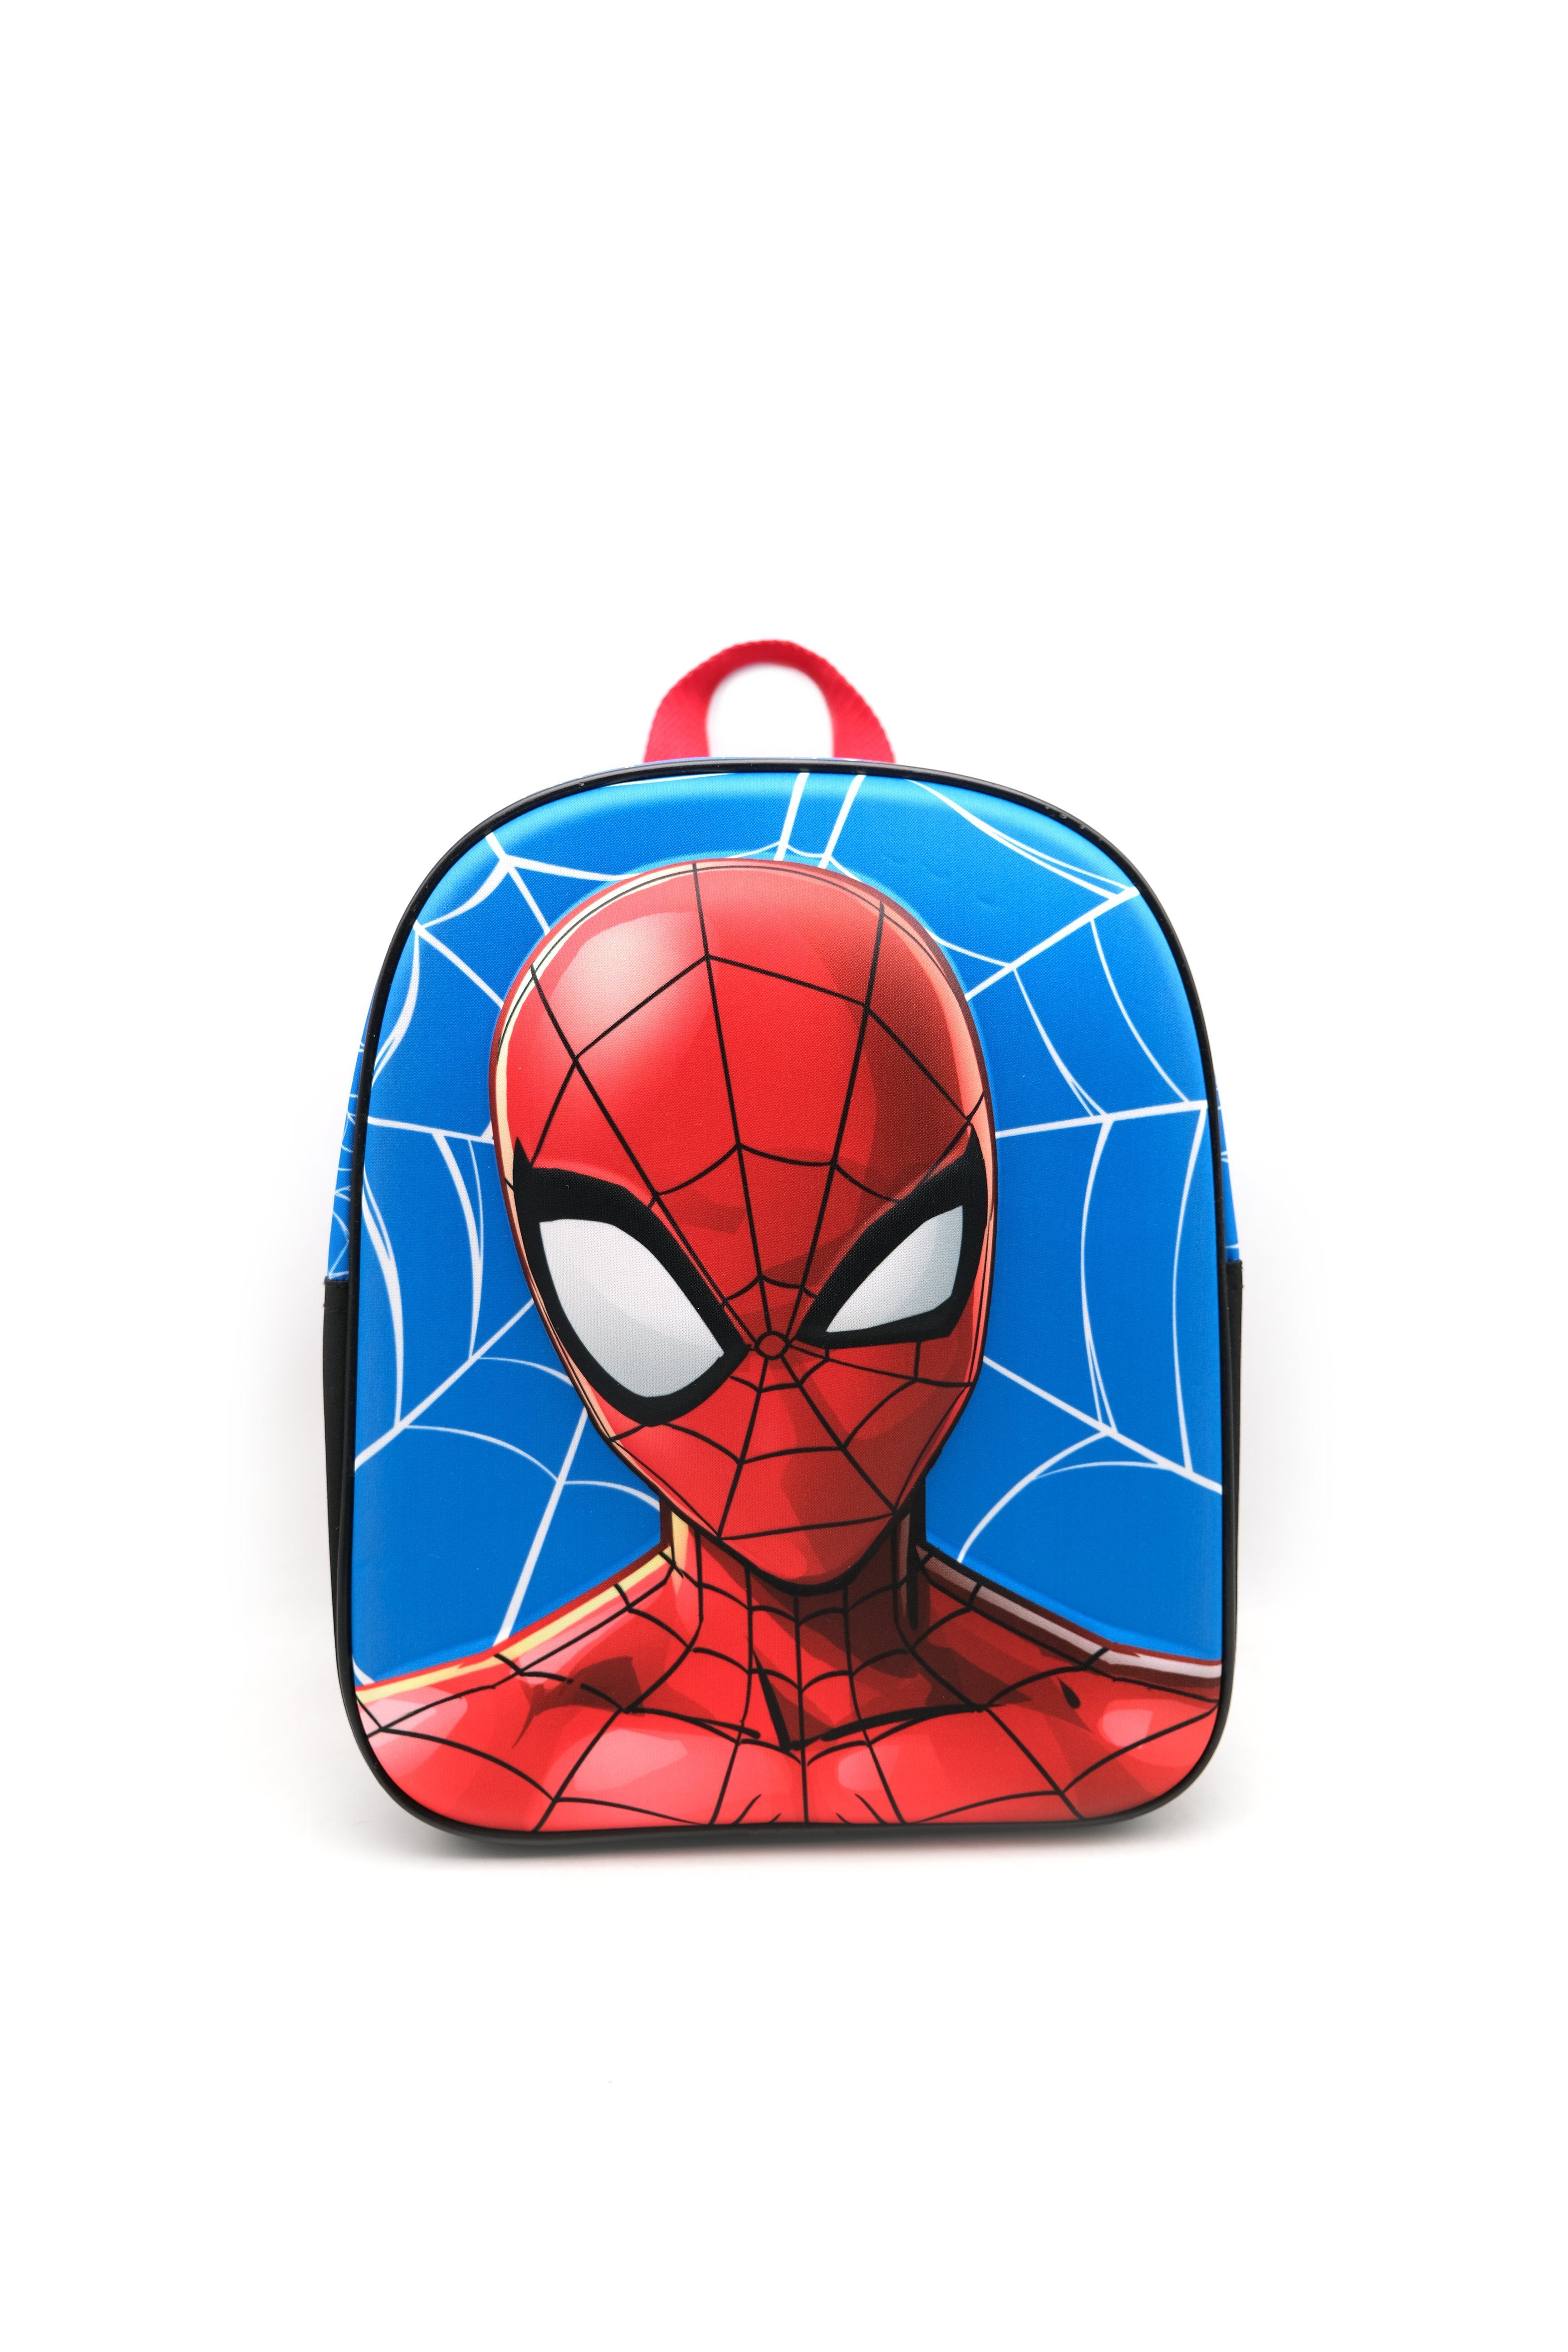 Tasche EVA "Spiderman" Kinderrucksack Kleinkinderrucksack Spiderman 30cm Schultasche